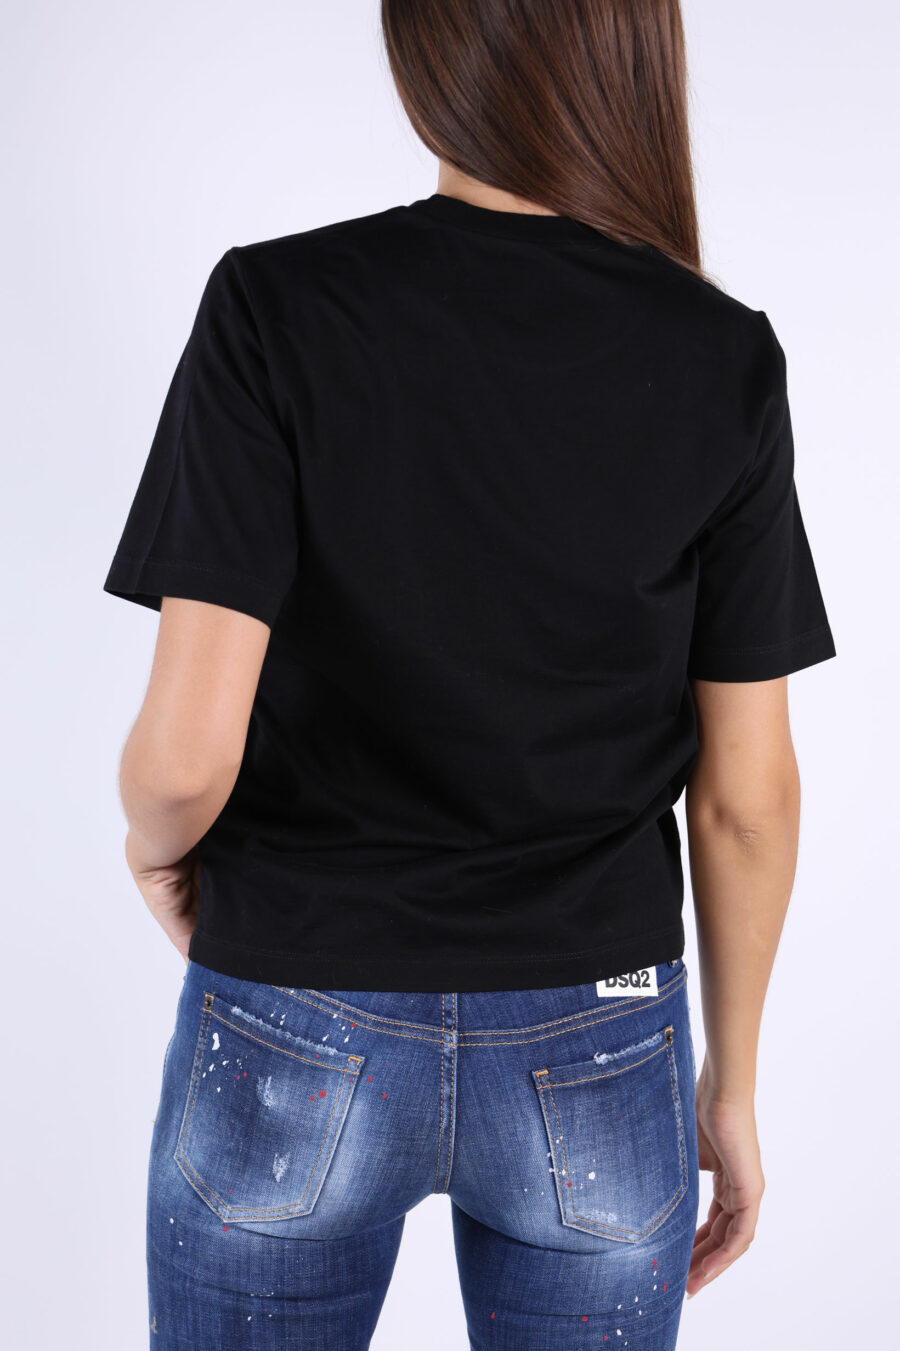 Black T-shirt with "icon pixeled" logo - 361223054662201926